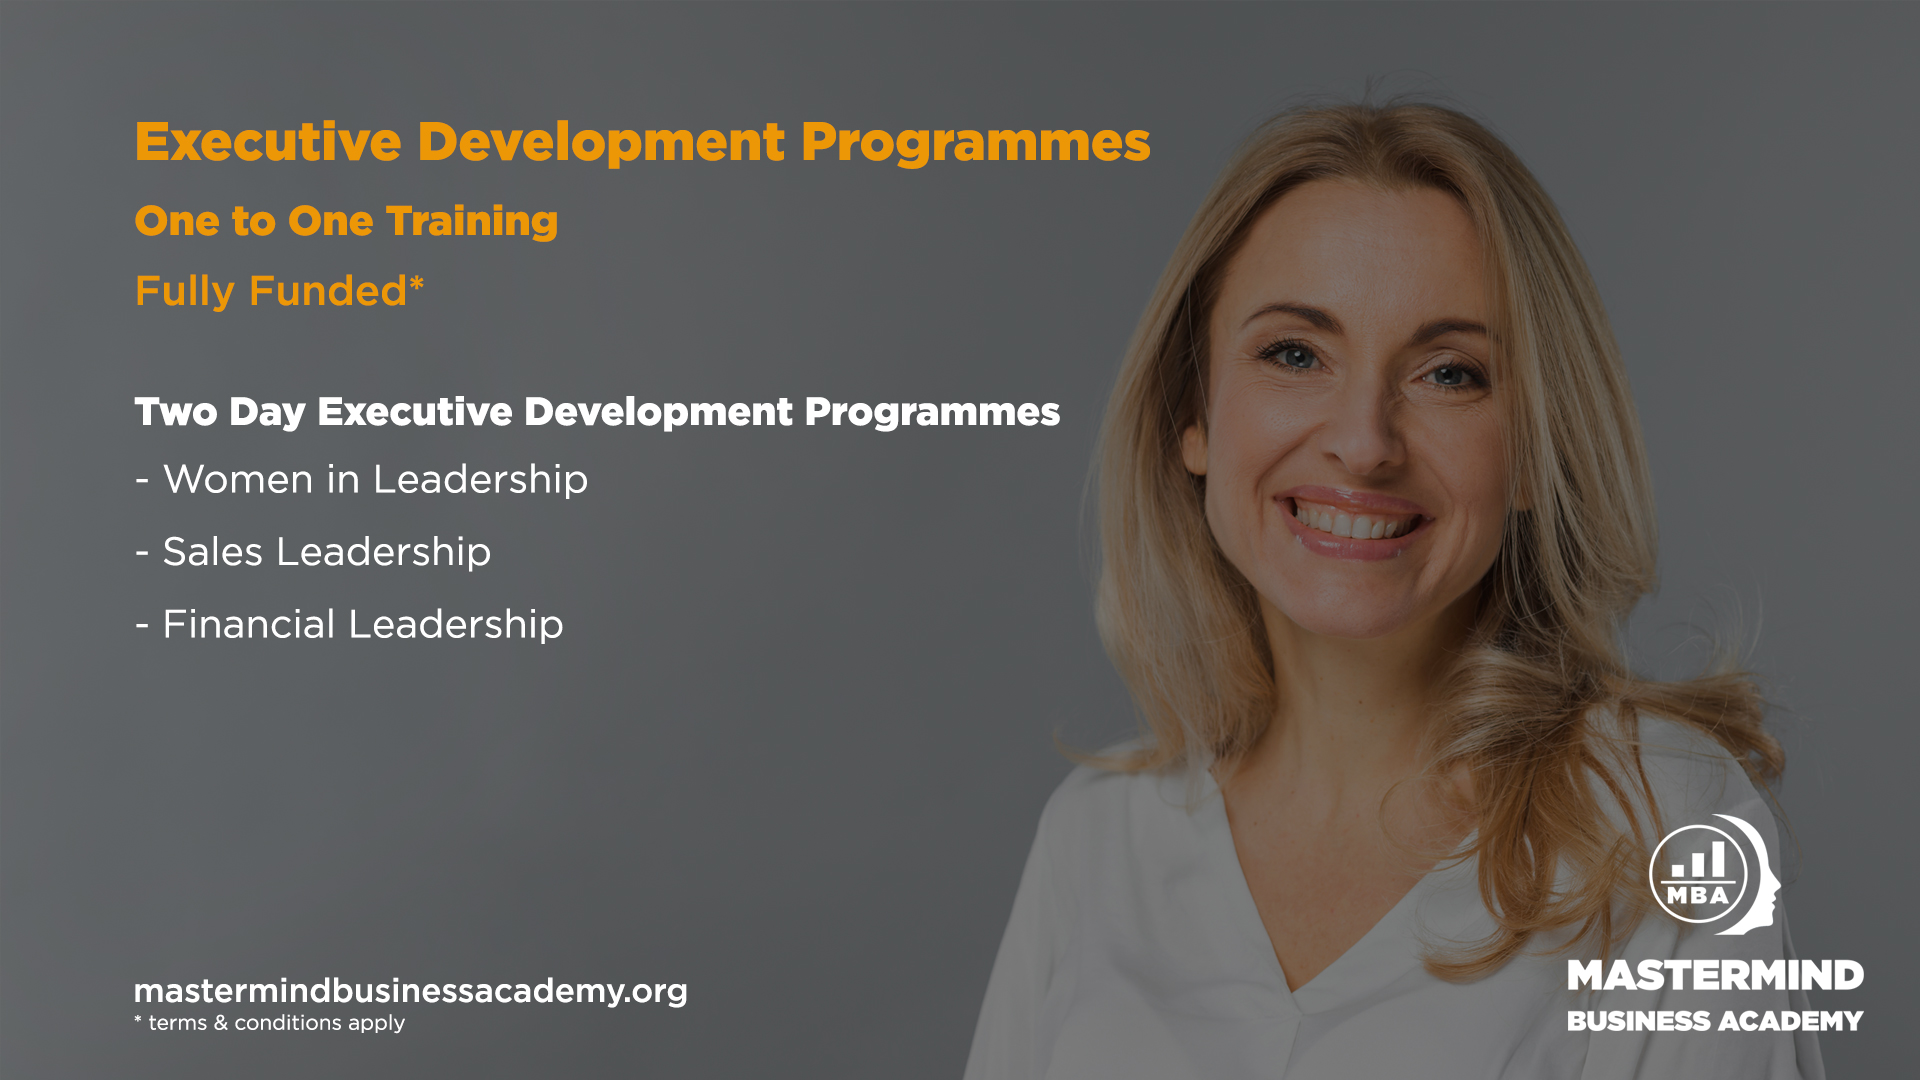 Executive Development Programme - Leadership and Management Courses - Mastermind Business Academy - mastermindbusinessaxademy.org